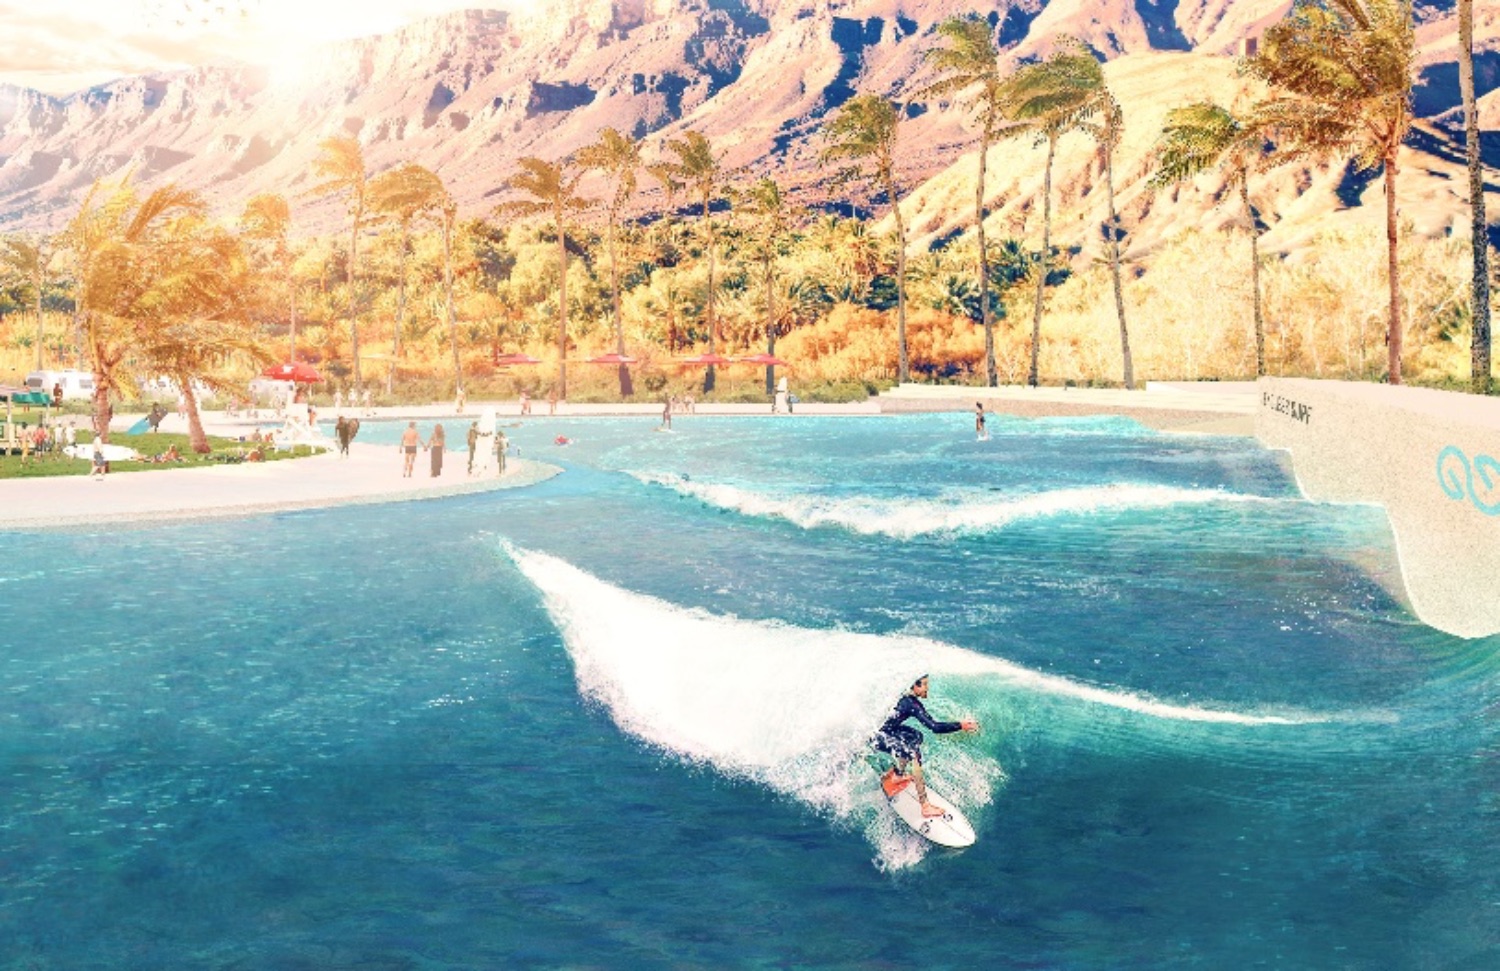 artist rendering of surfing an enldess surf wave pool